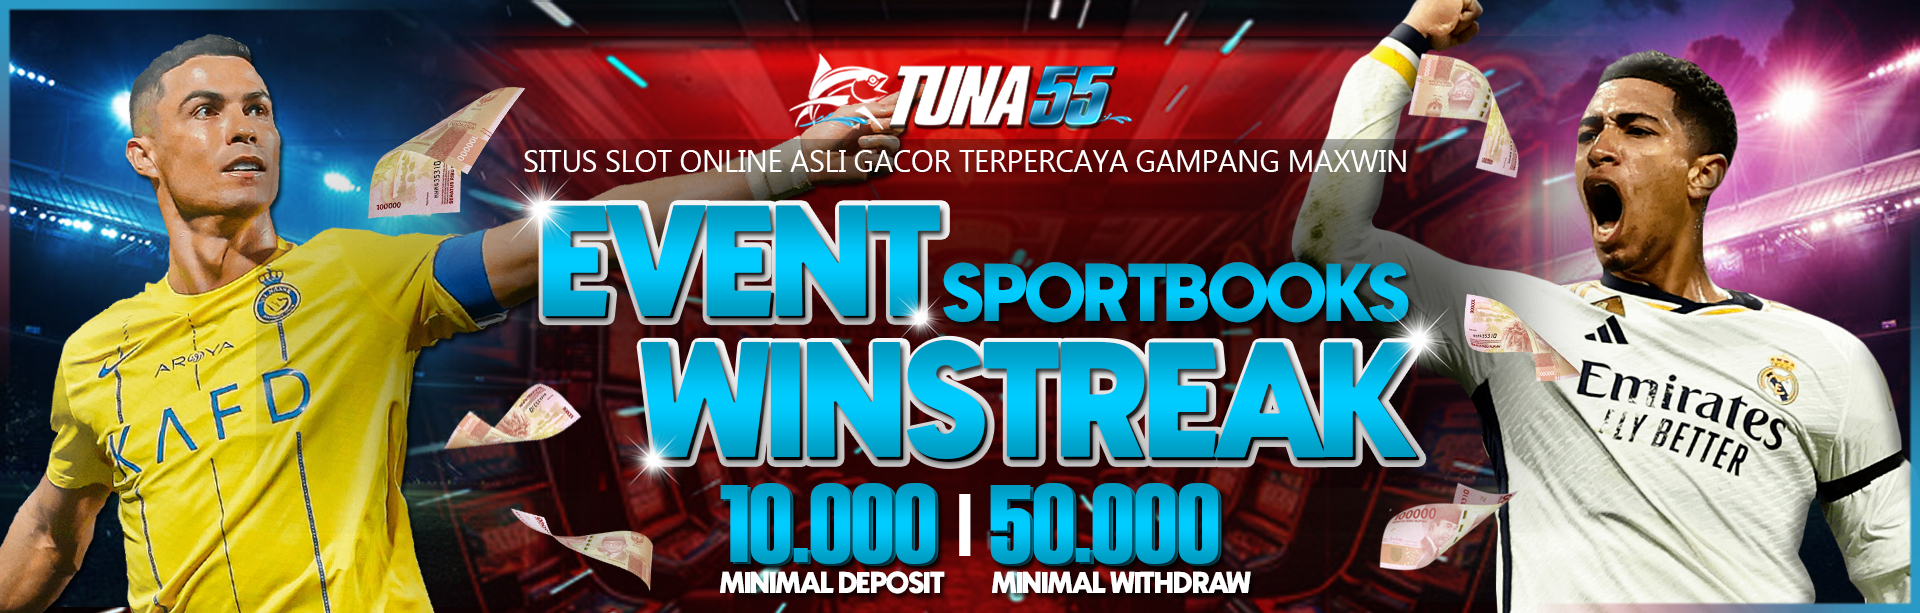 Event Winstreak Sportsbook Judi Bola Terpercaya - Tuna55